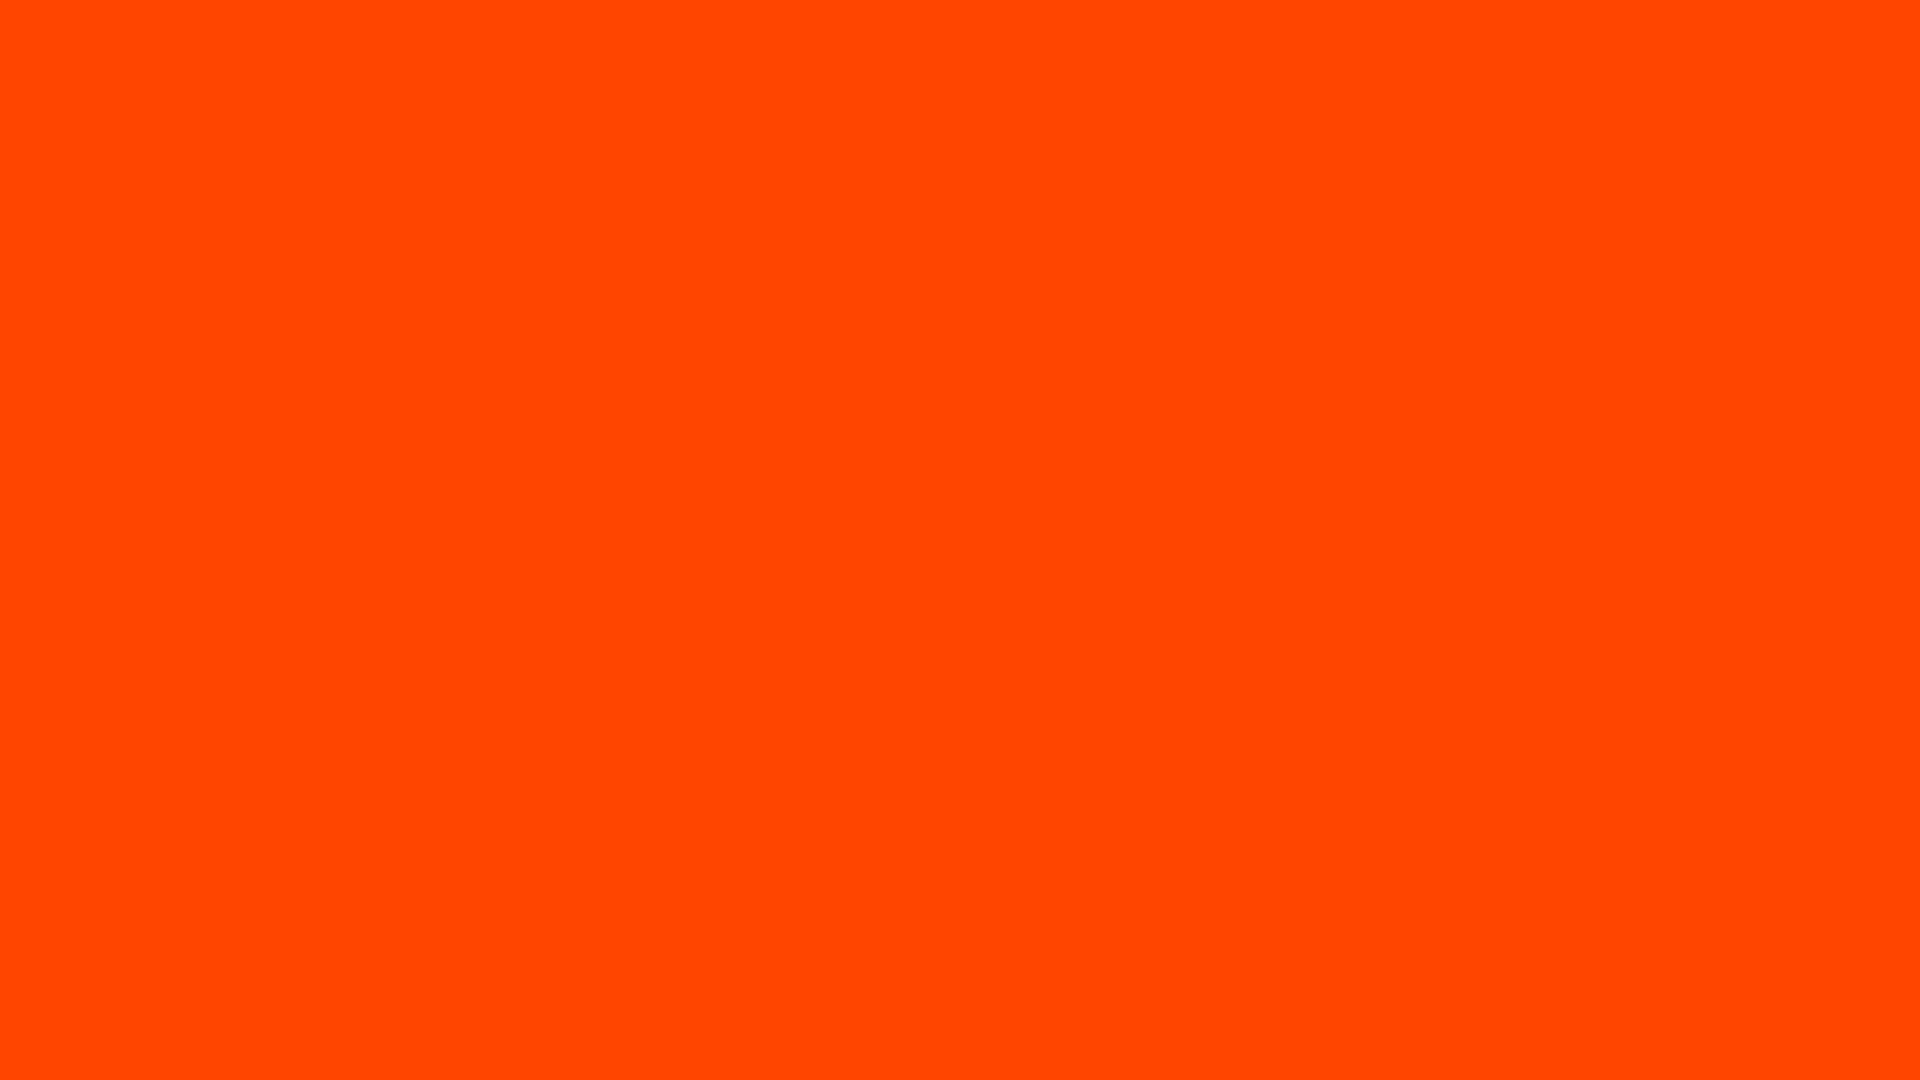 1920x1080 Orange Red Solid Color Background